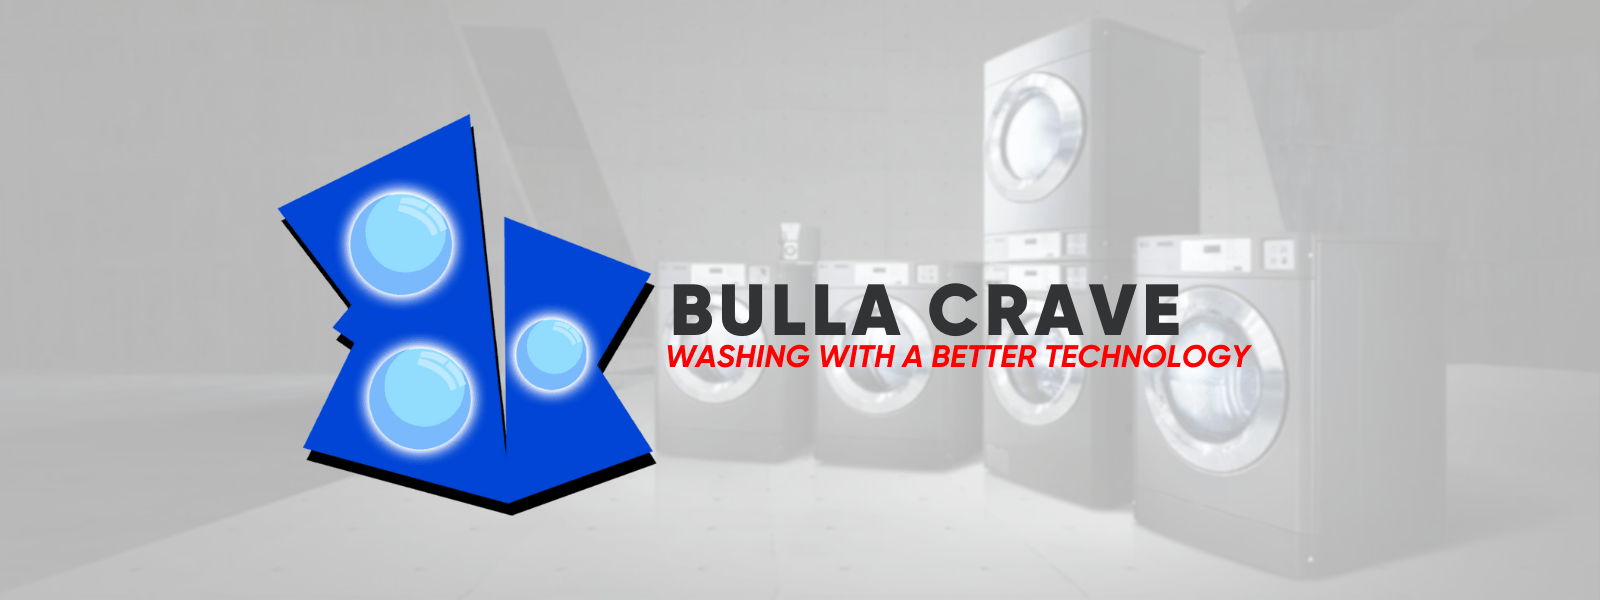 bulla crave (1600 × 600 px) (1)-min